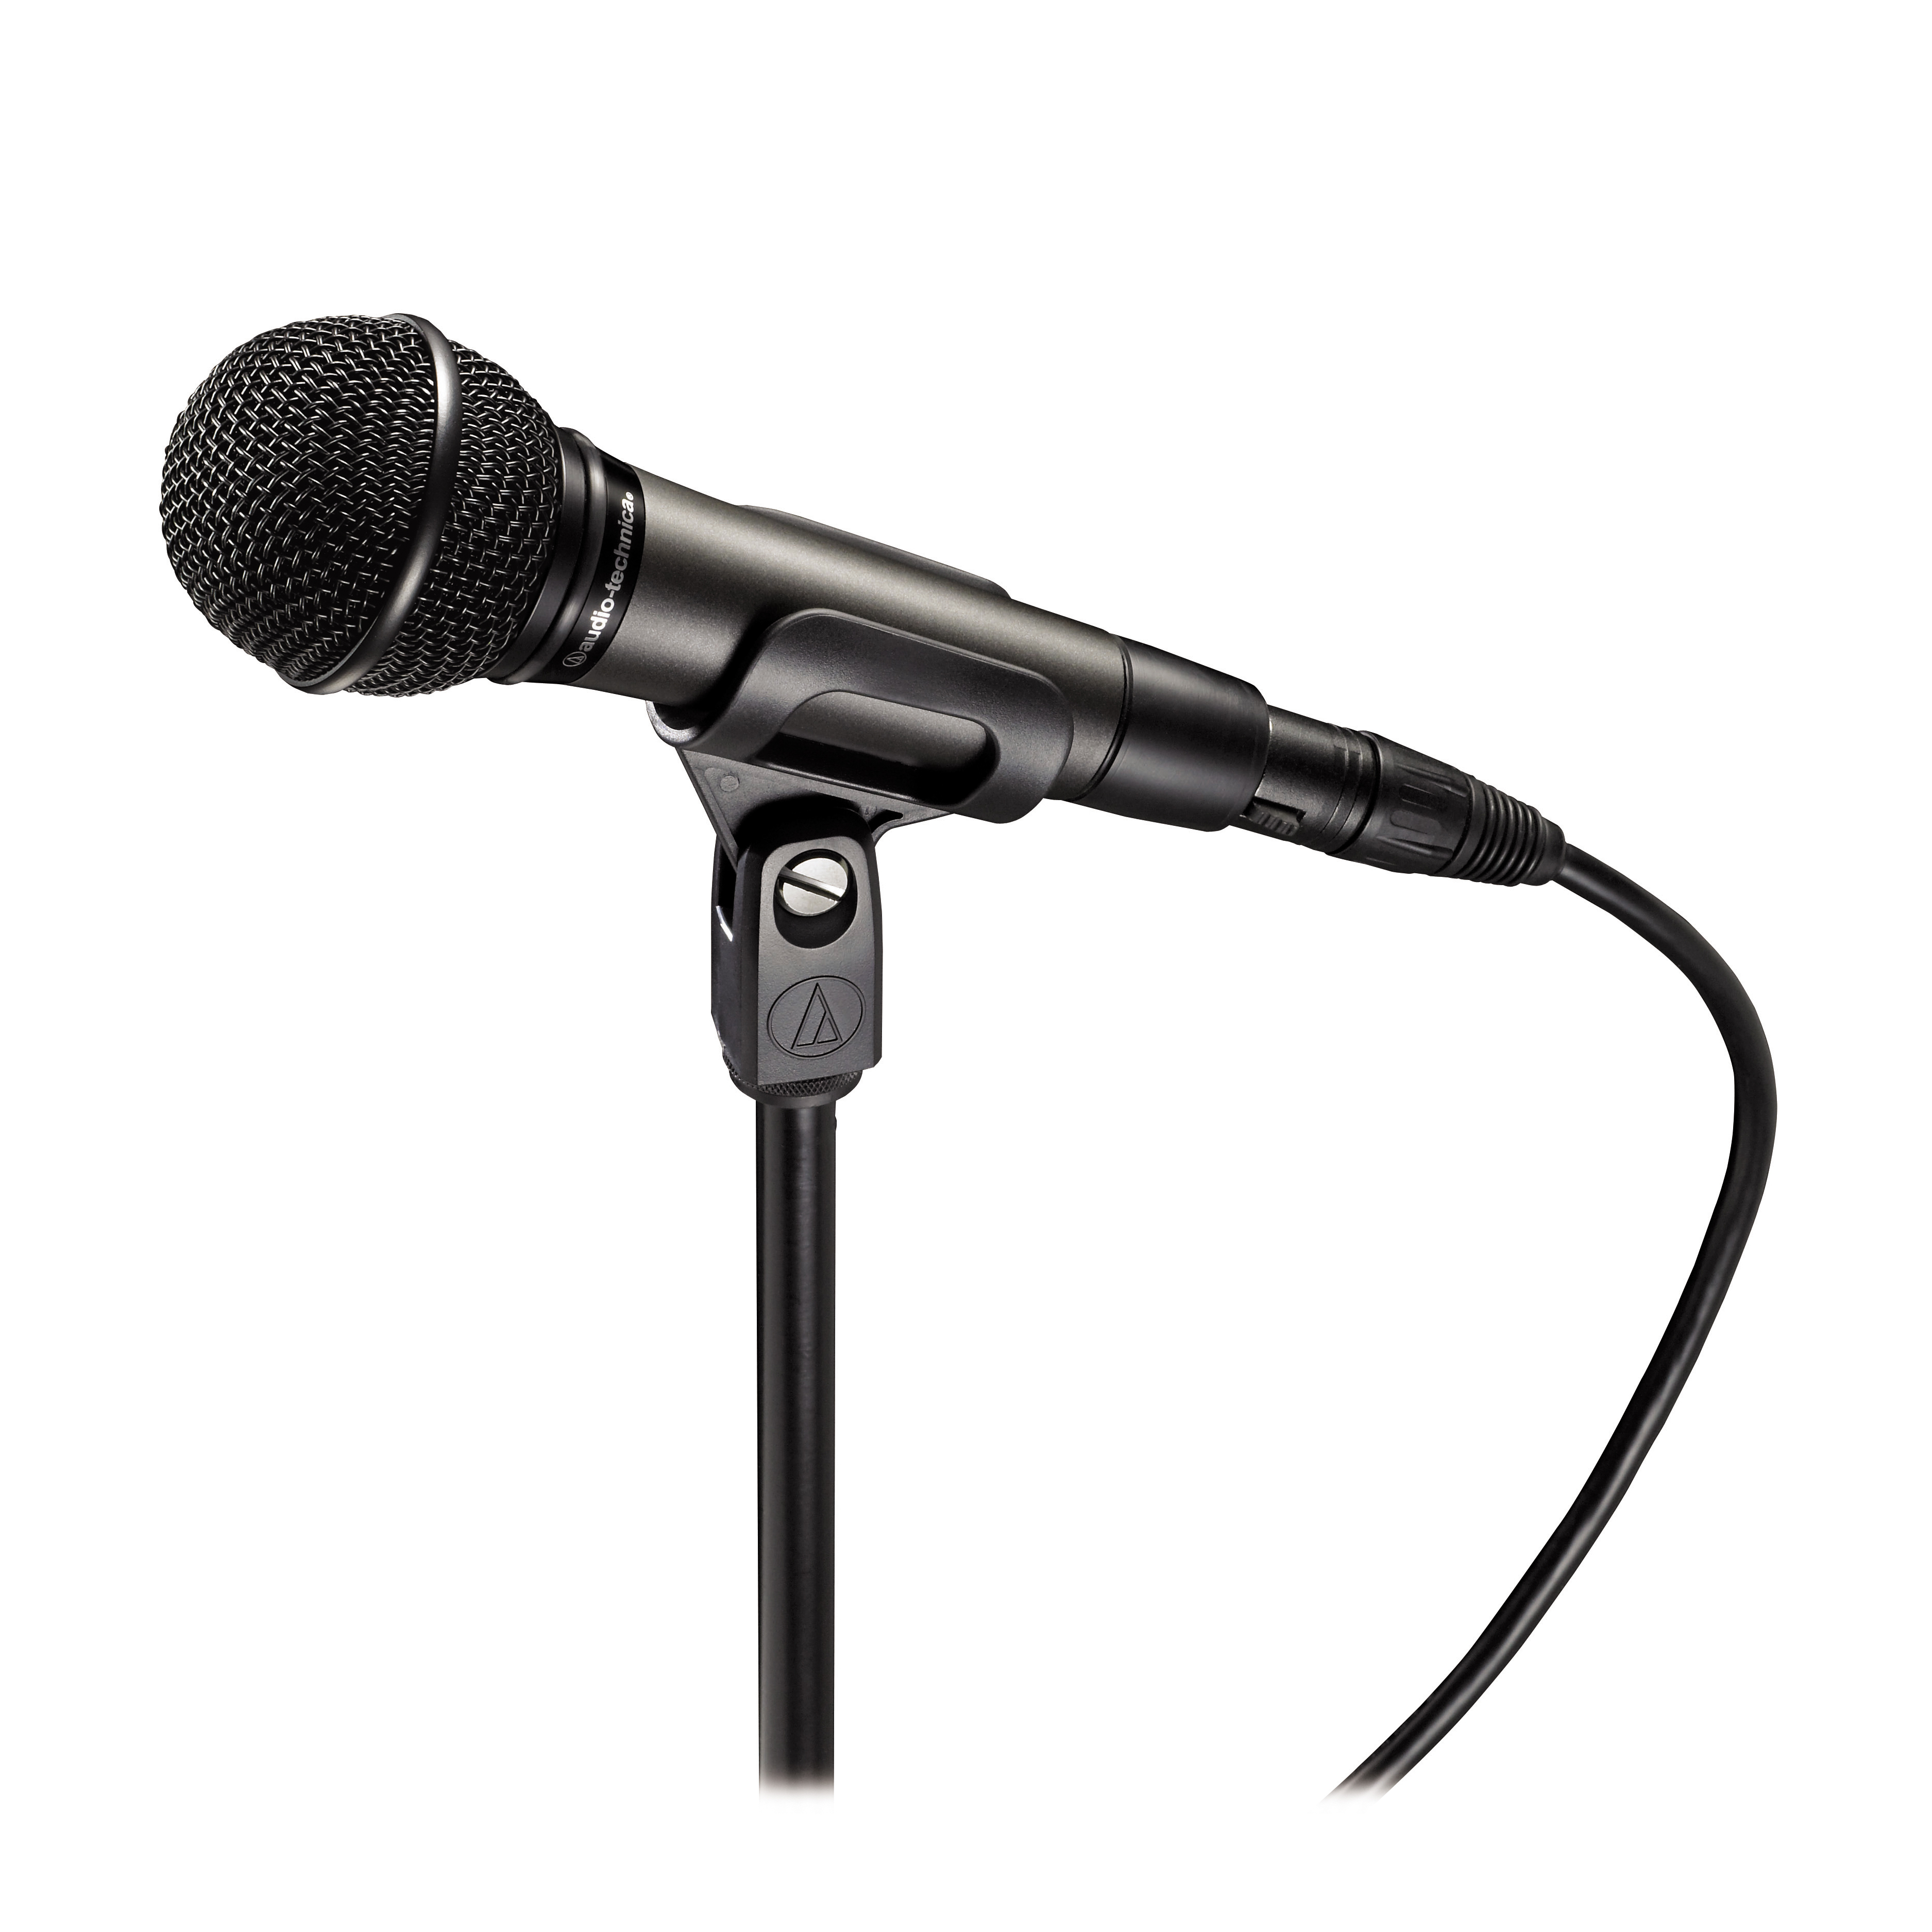 Audio Technica Atm510 - Vocal microphones - Variation 1